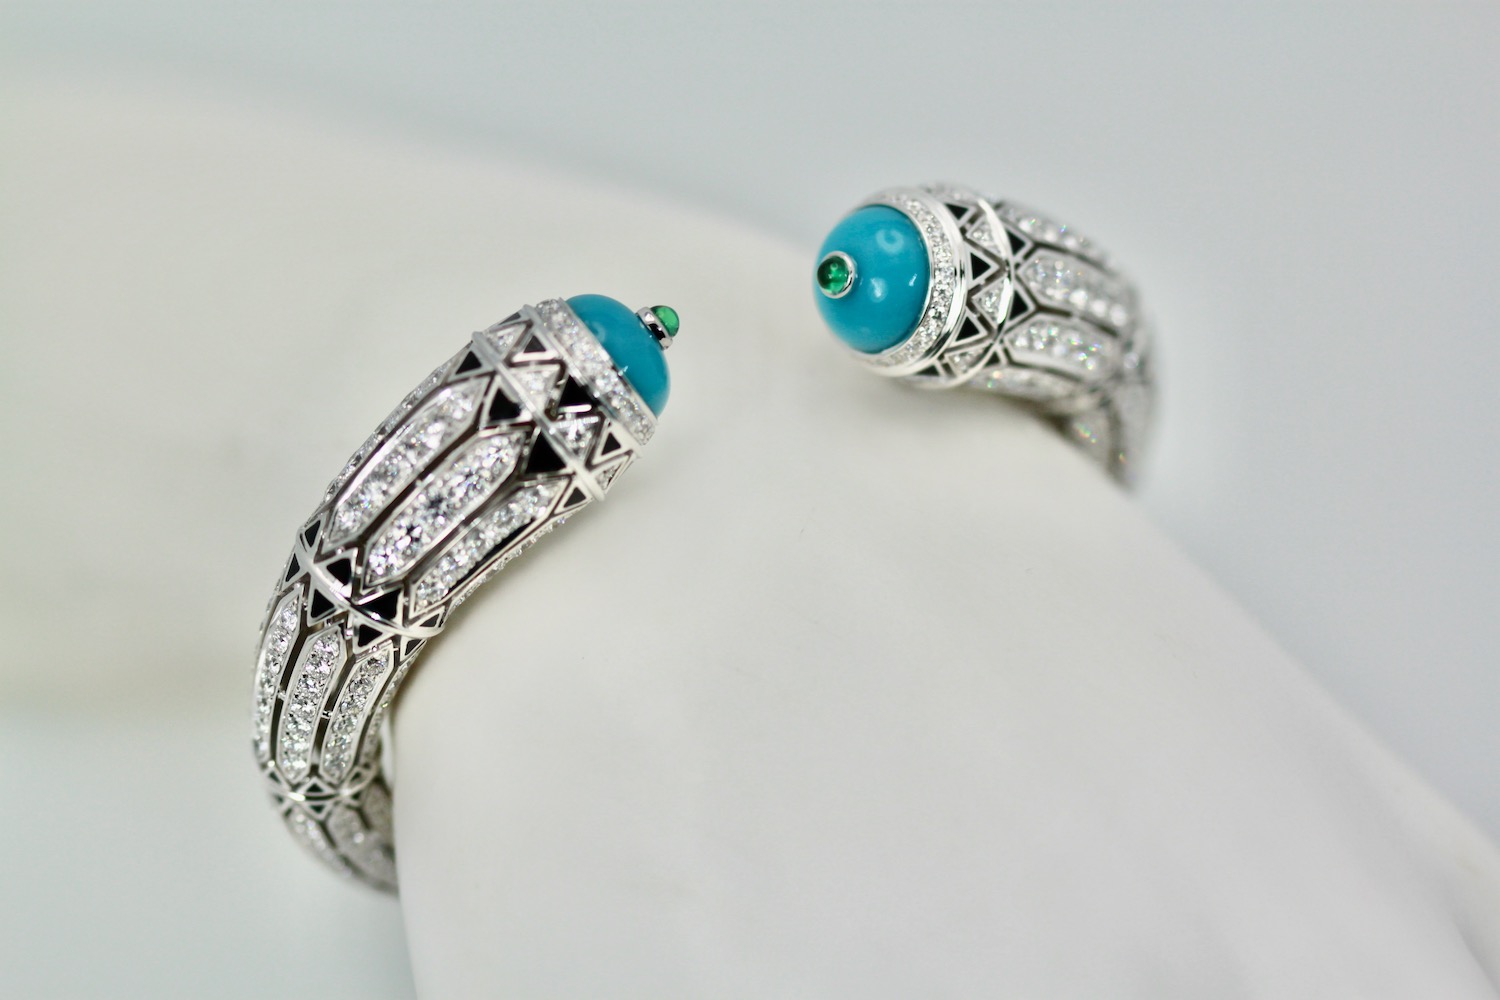  Cartier High Jewelry Diamond Turquoise Bracelet – model 3